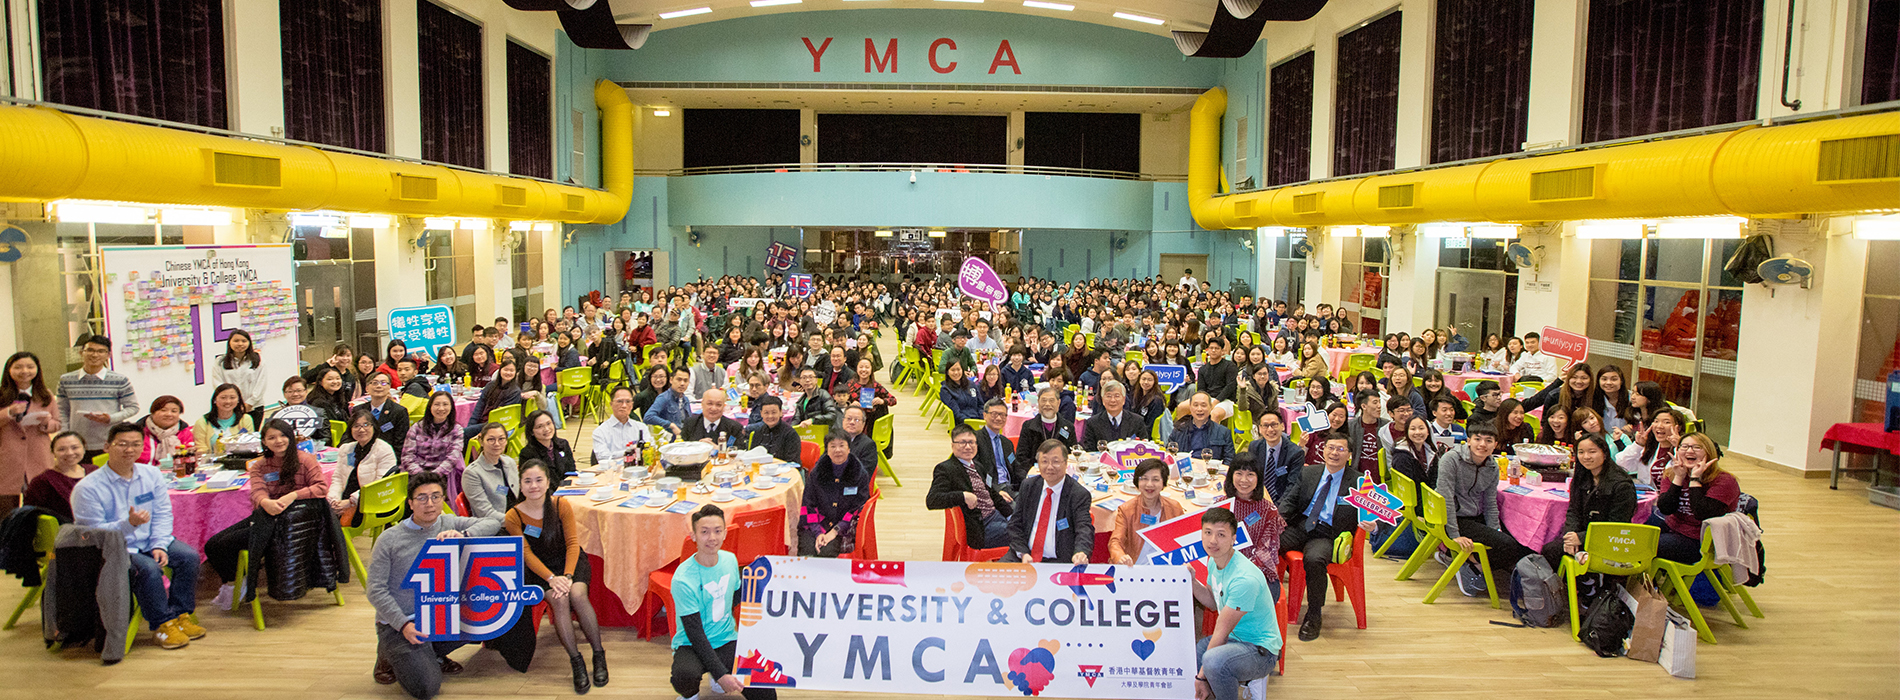 University & College YMCA 15th Anniversary Dinner